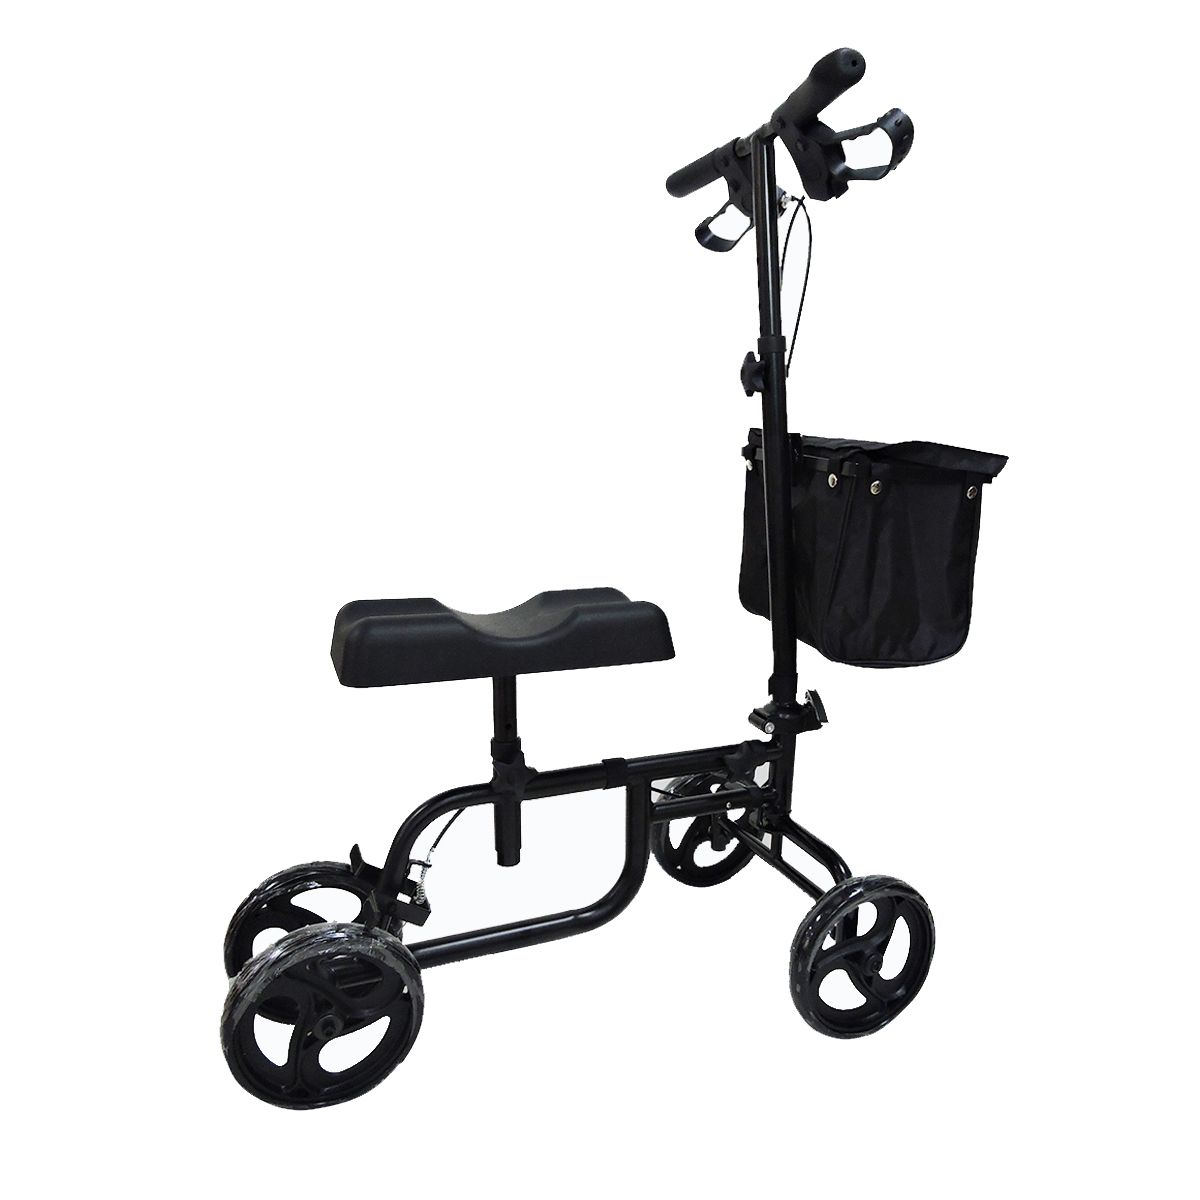 Mobility-Knee-Walker-Scooter-Roller-Crutch-Leg-Steerable-Foldable-Black-1749047